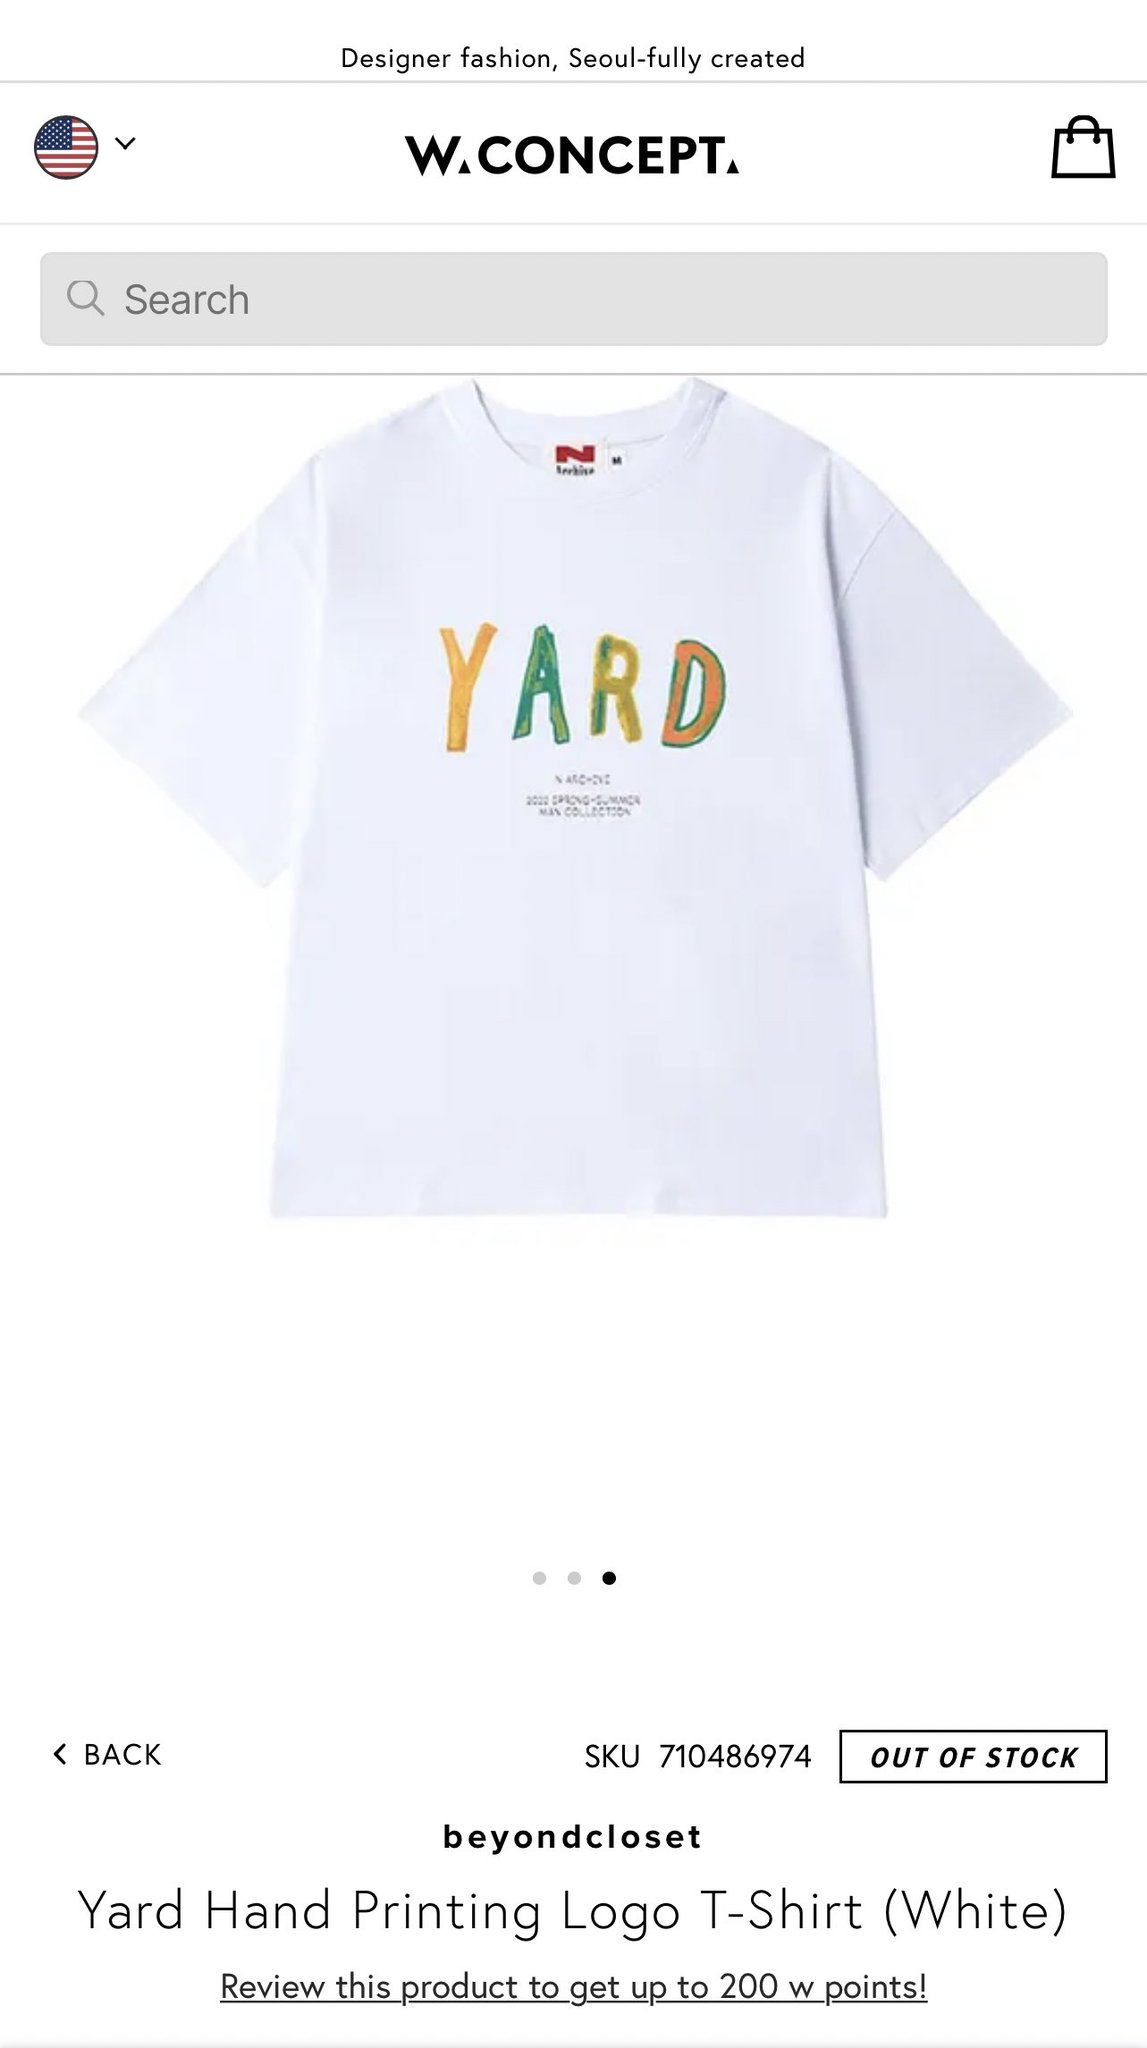 Beyond Closet brand creates a '#BTS #Jin T-shirt' section with